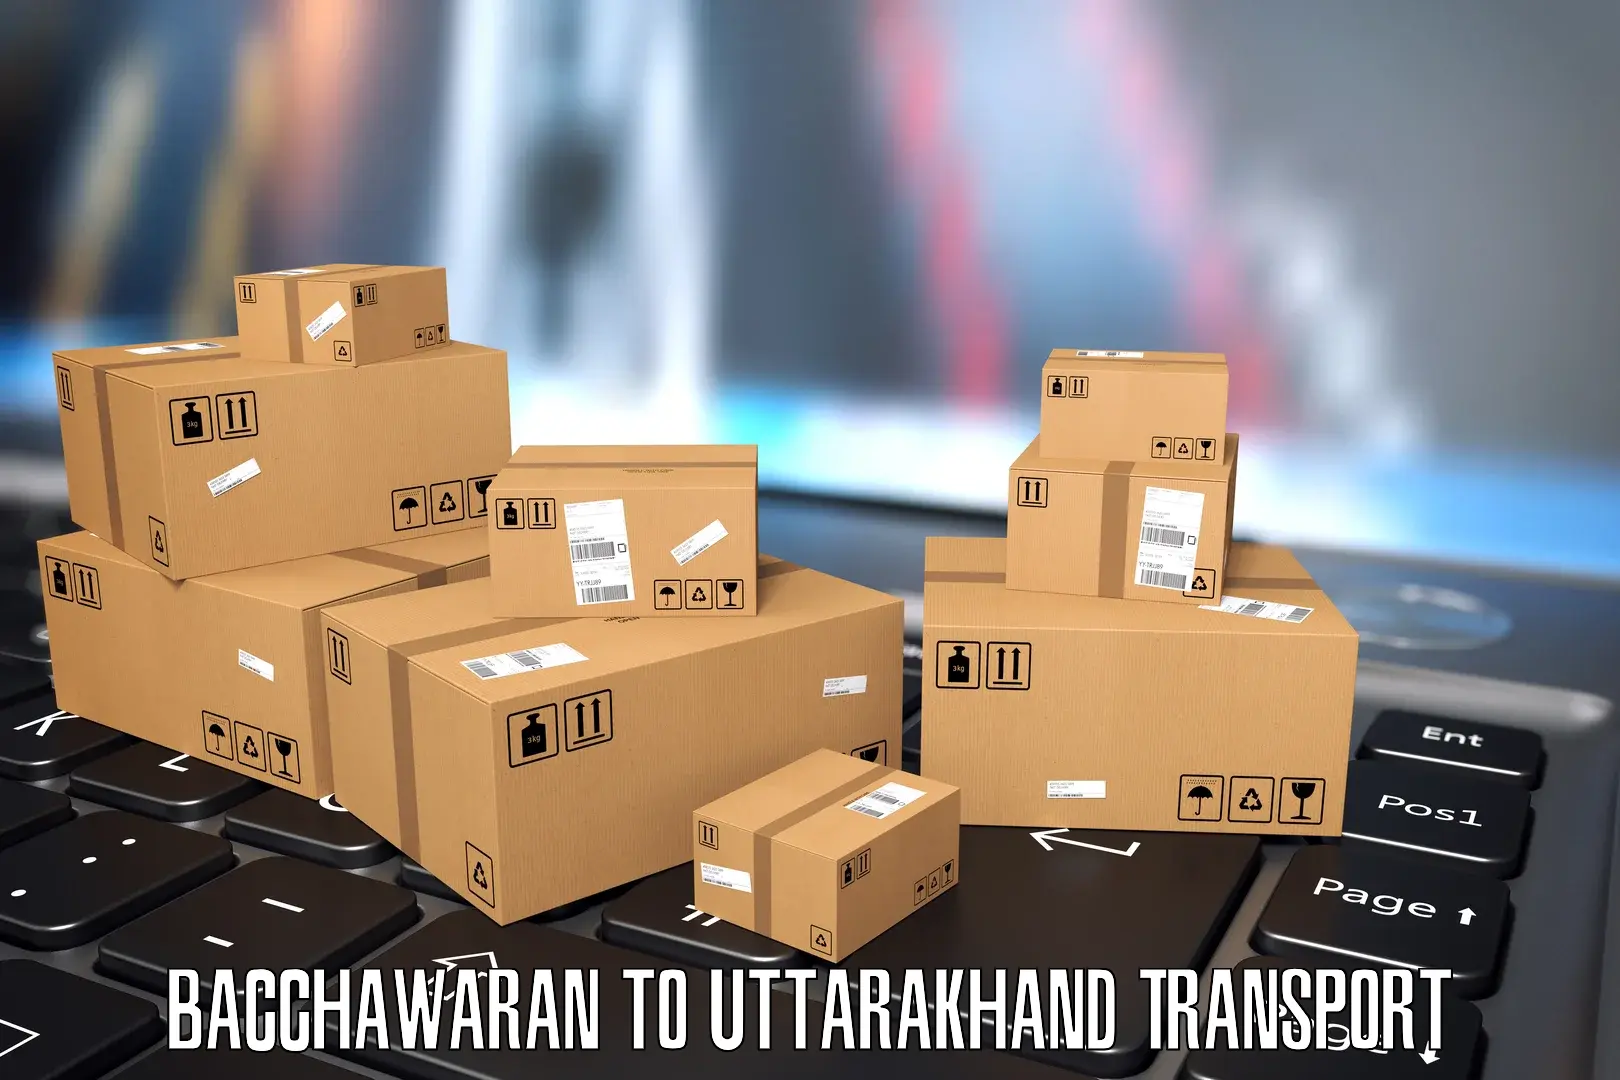 Transport in sharing in Bacchawaran to IIT Roorkee